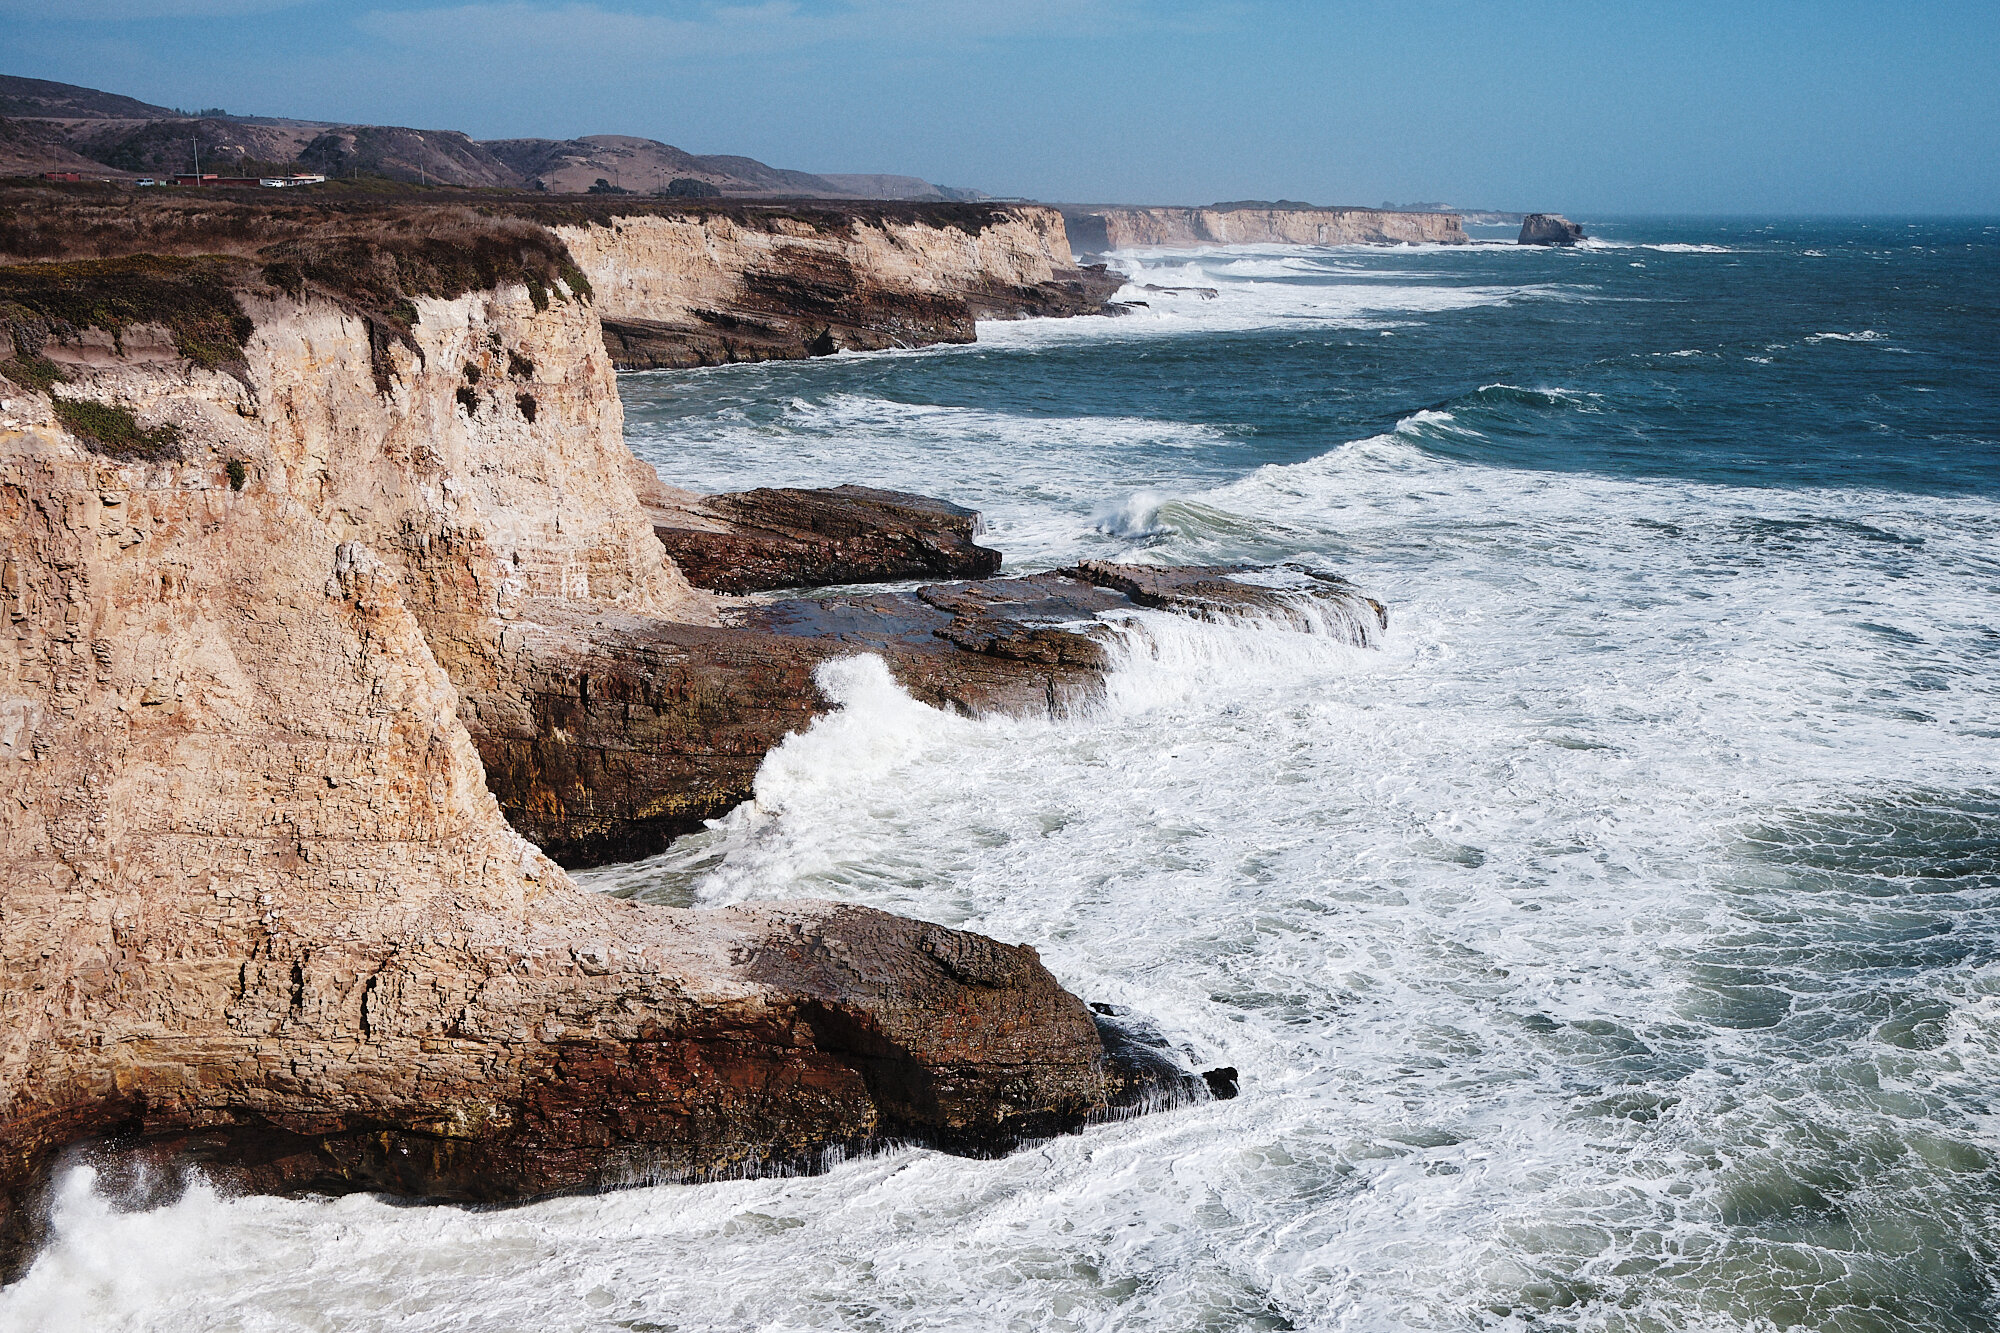  The tide on its way out, slowly revealing the jagged rocks below. | 9/25/20 Santa Cruz, CA 